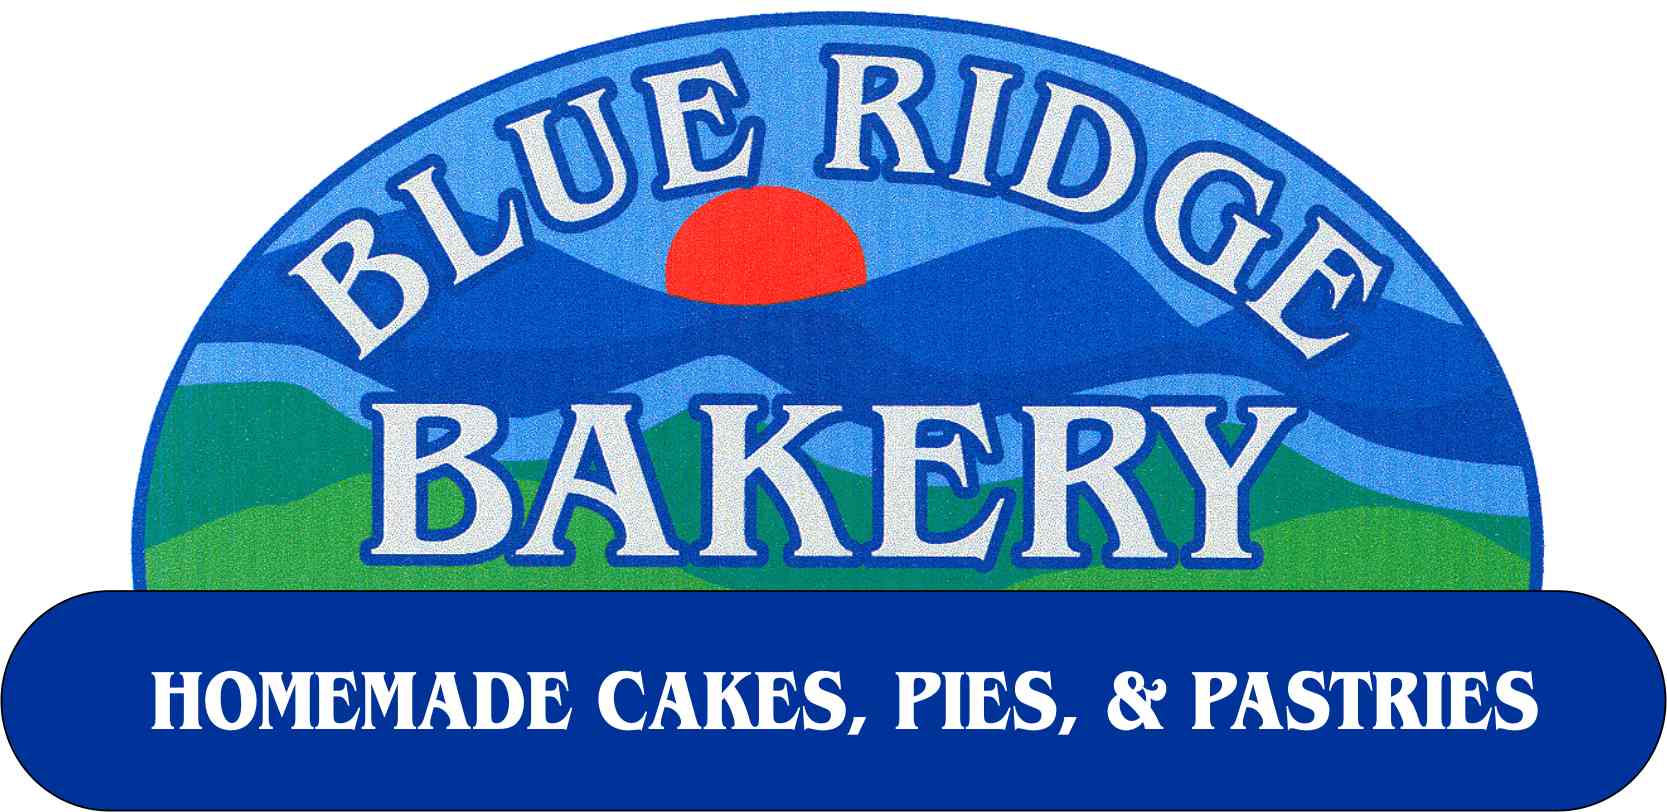 Blue Ridge Bakery